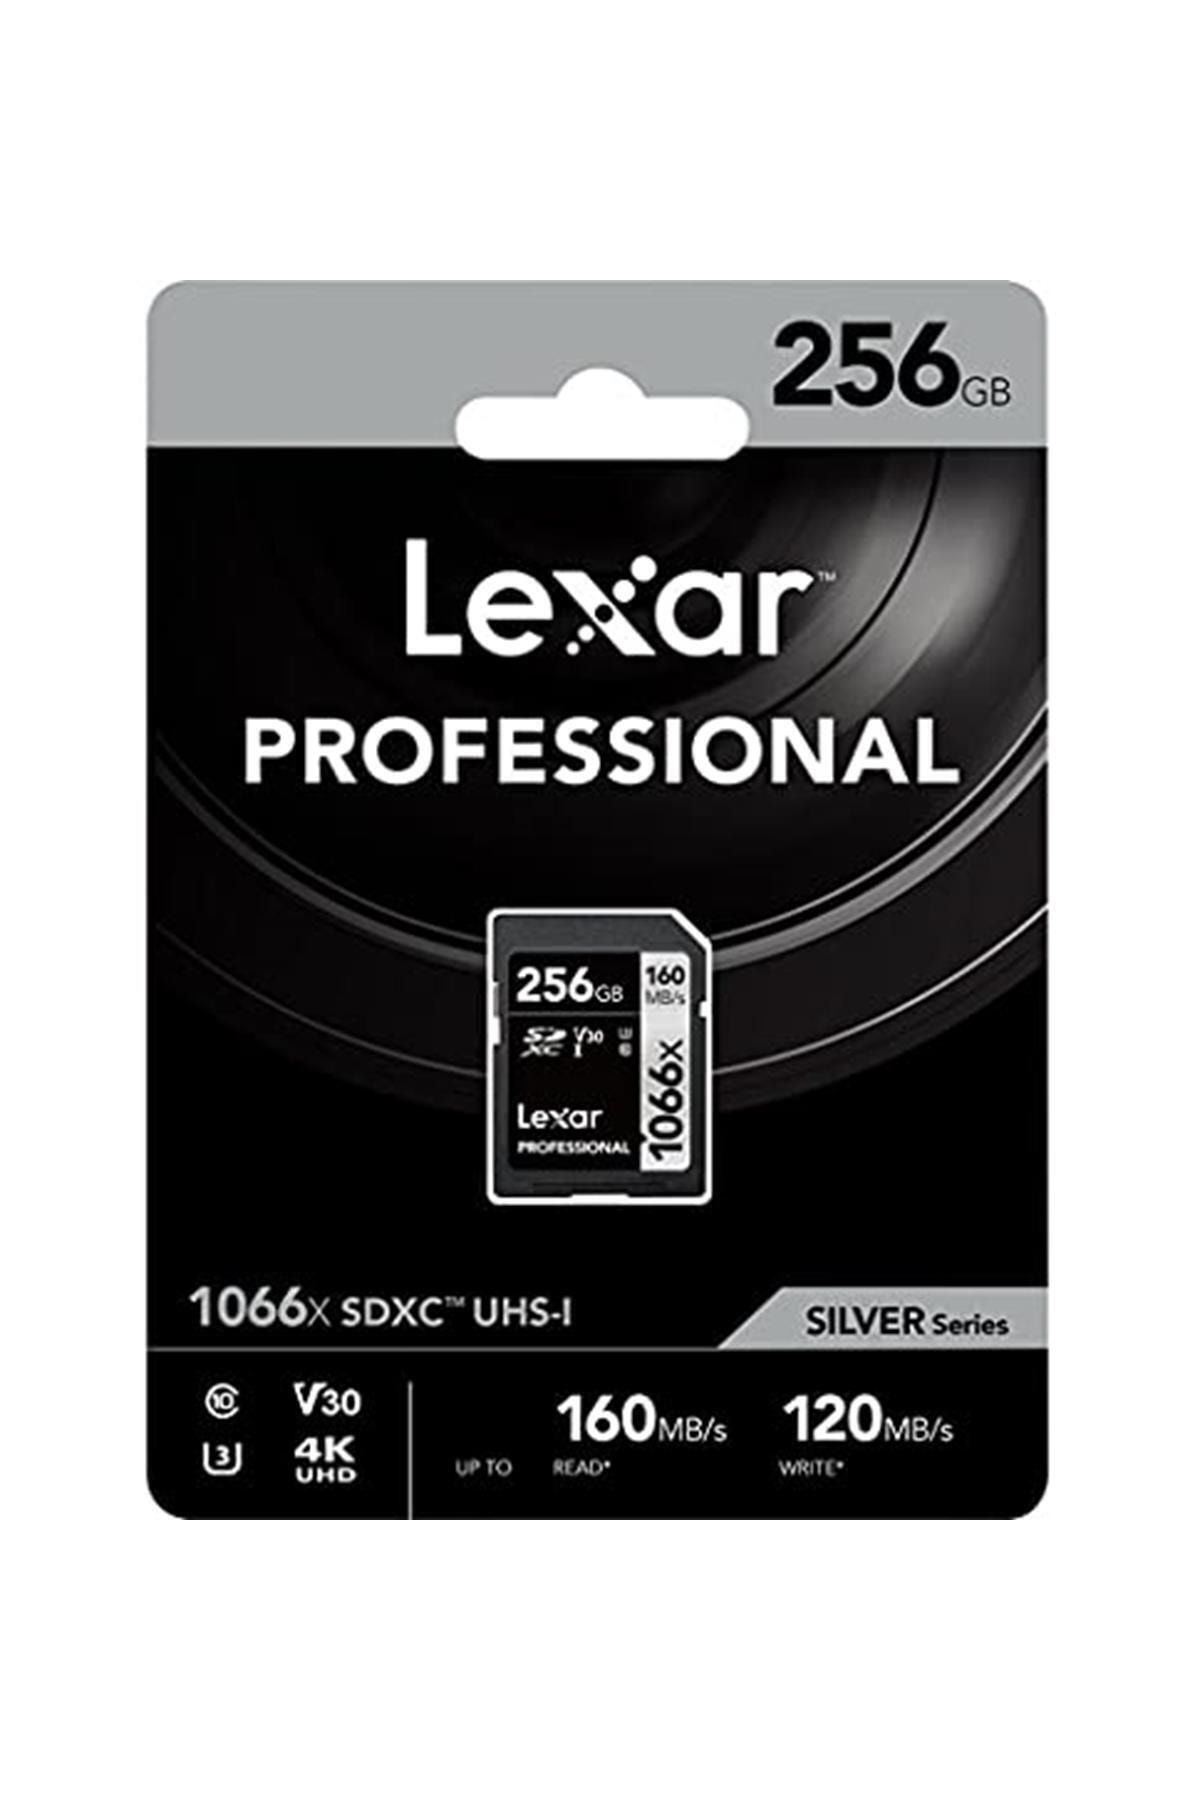 Lexar 256 gb Professional 1066x Sdxc Uhs-ı Cards Up To 160mb/s Read 120mb/s Write C10 V30 U3